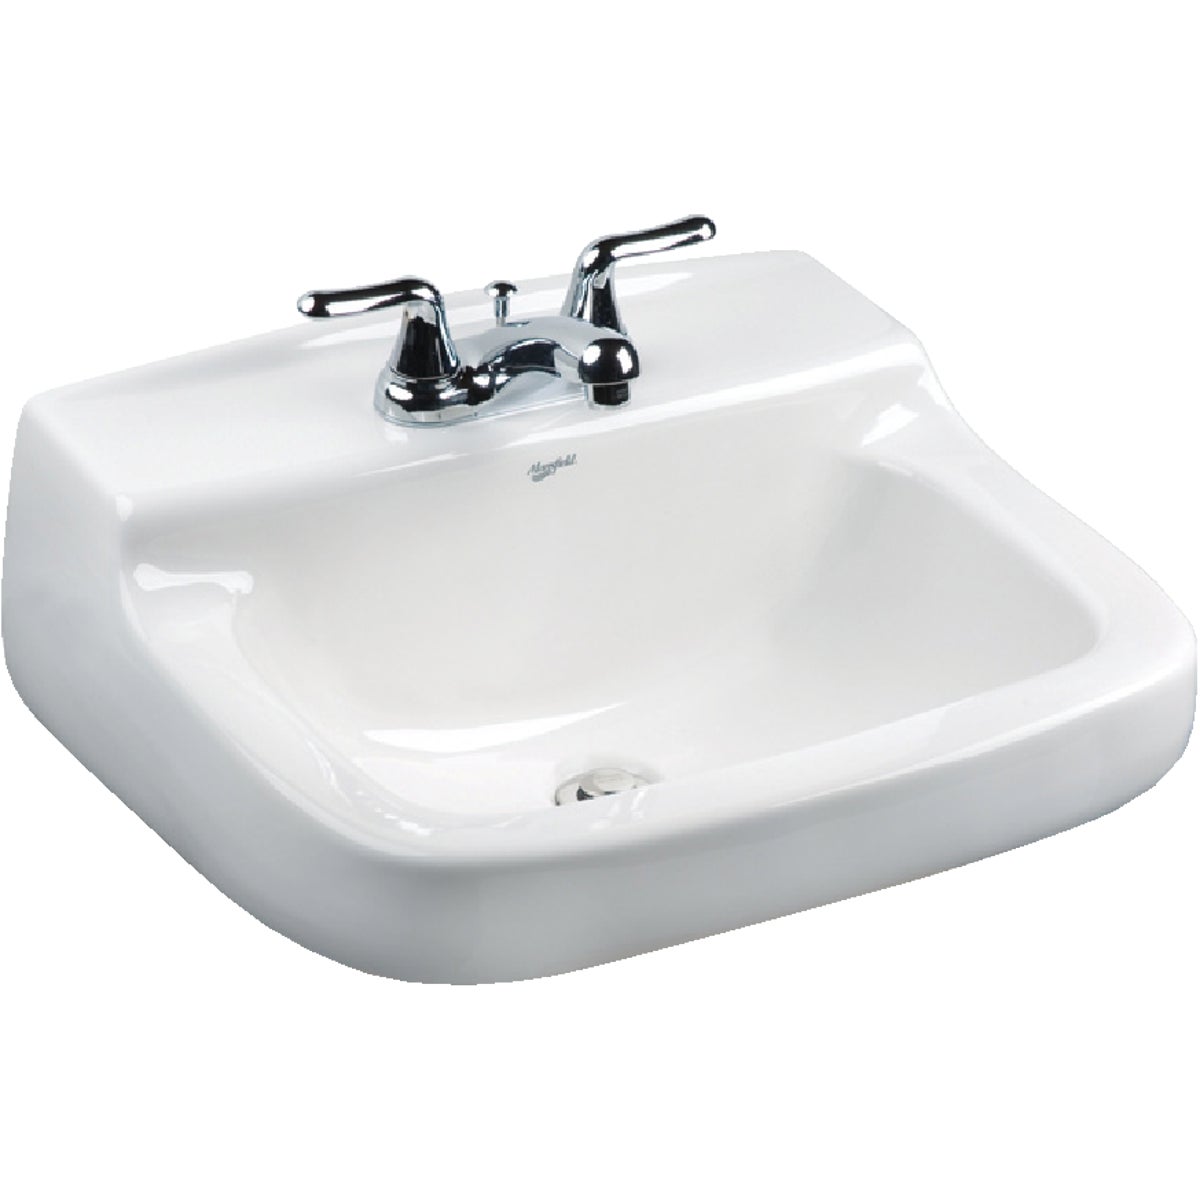 Mansfield Walnut Knoll Rectangular Wall Hung Bathroom Sink, White